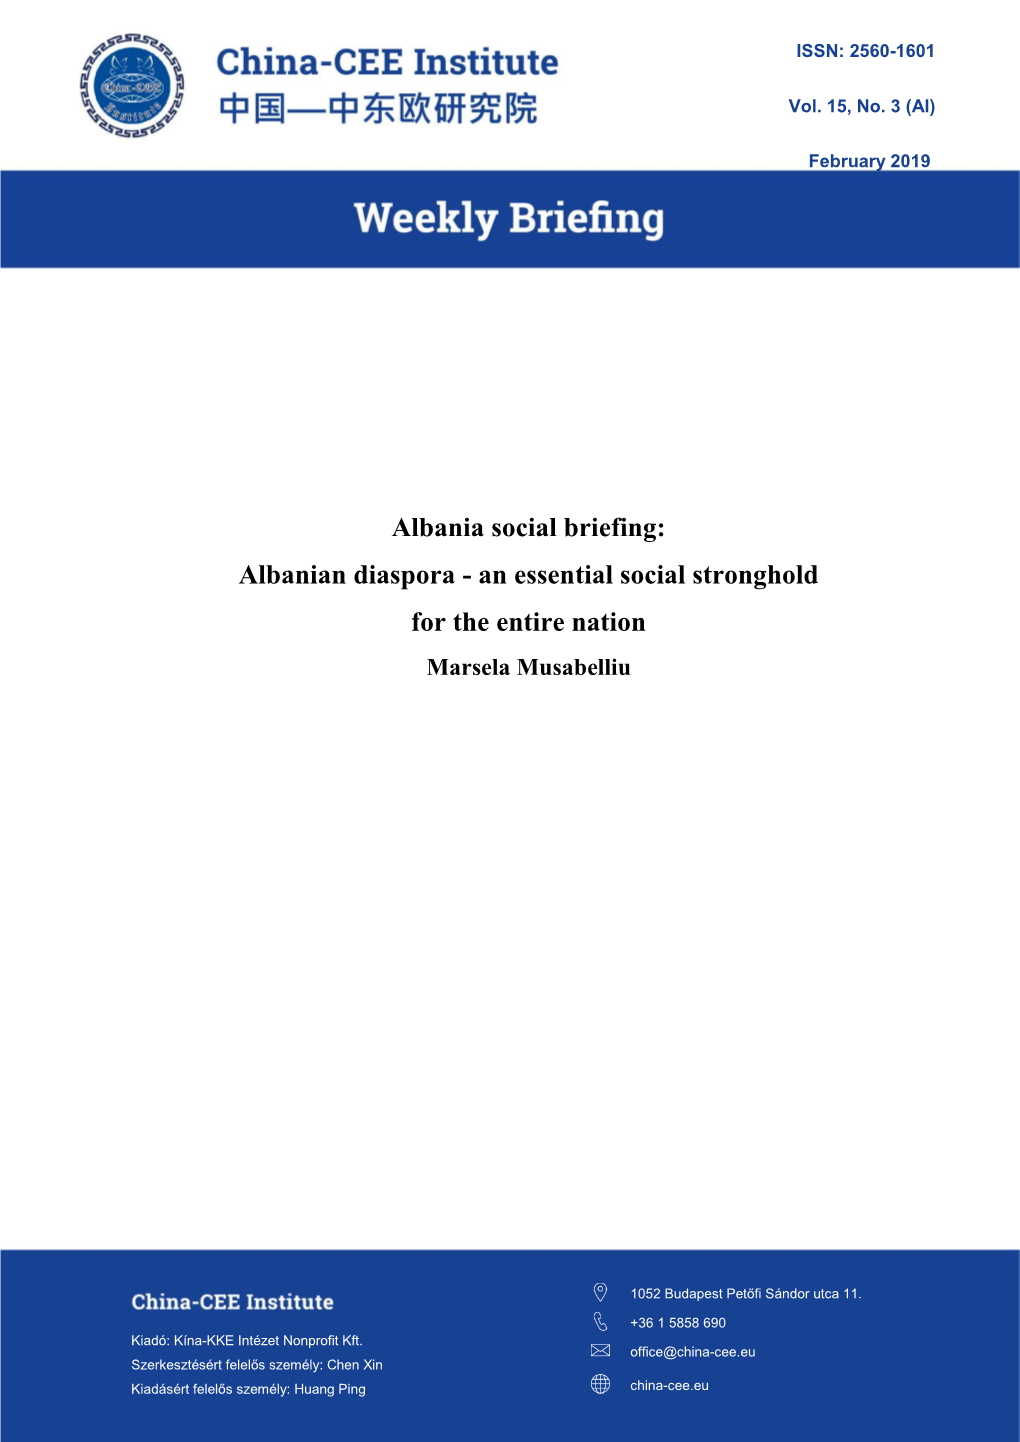 Albania Social Briefing: Albanian Diaspora - an Essential Social Stronghold for the Entire Nation Marsela Musabelliu